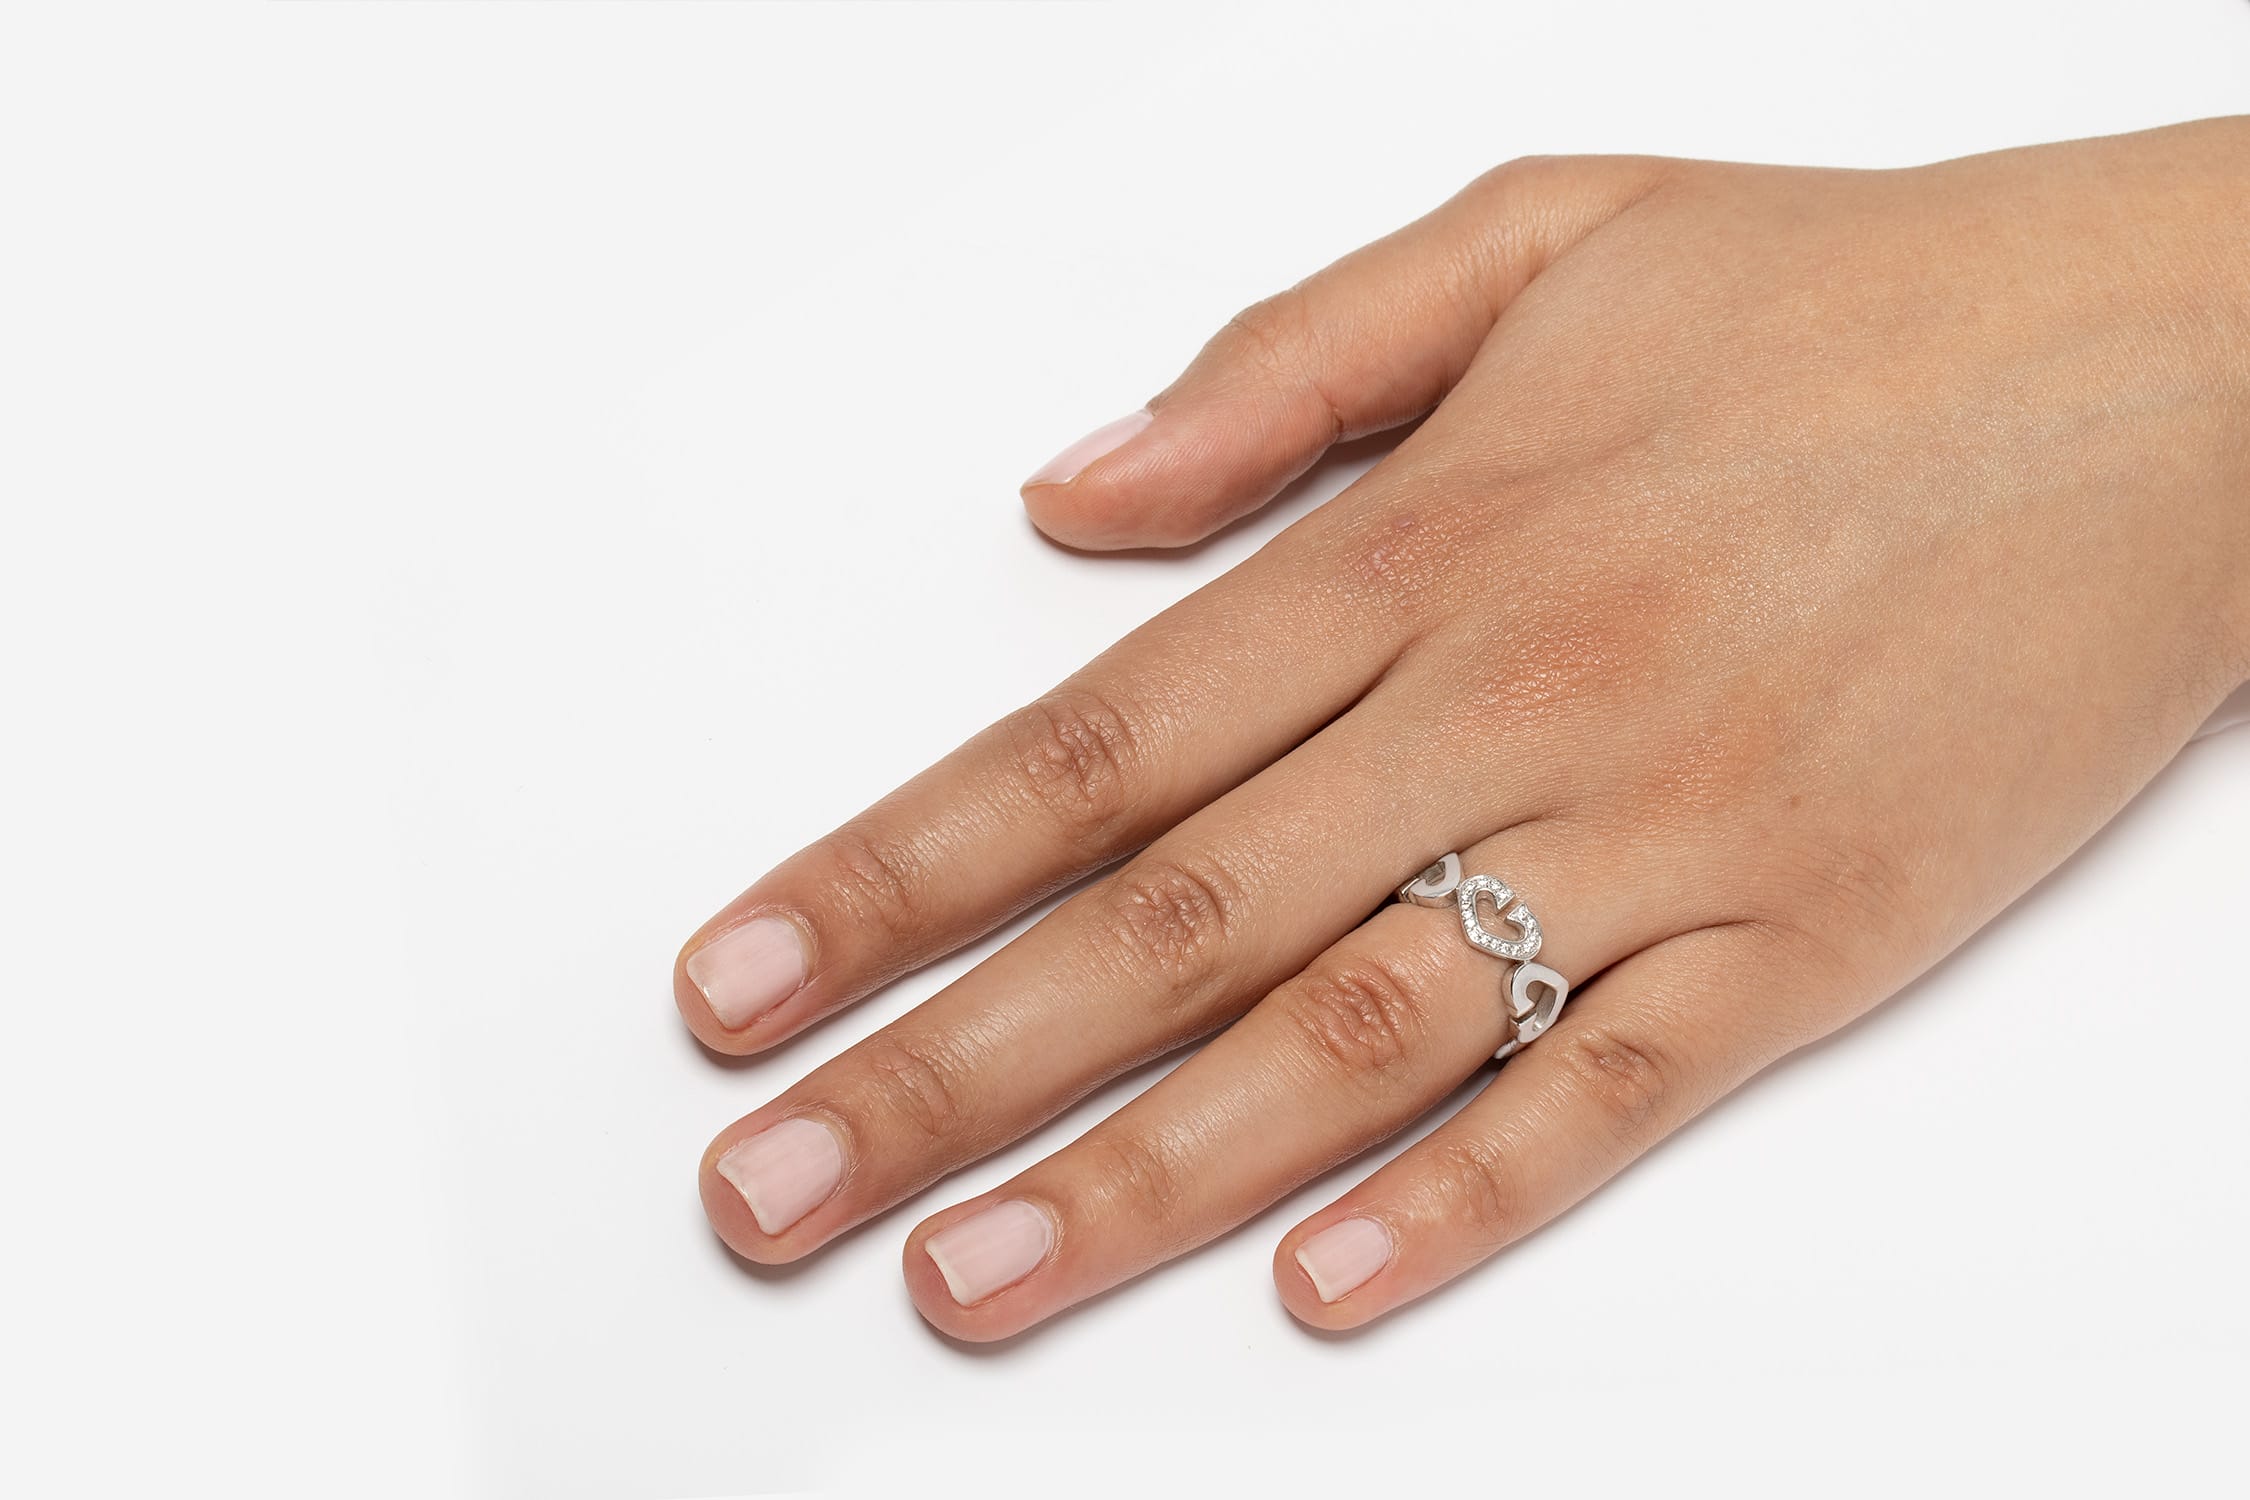 Cartier 'C Heart' Diamond Ring with Diamonds | Farringdons Jewellery